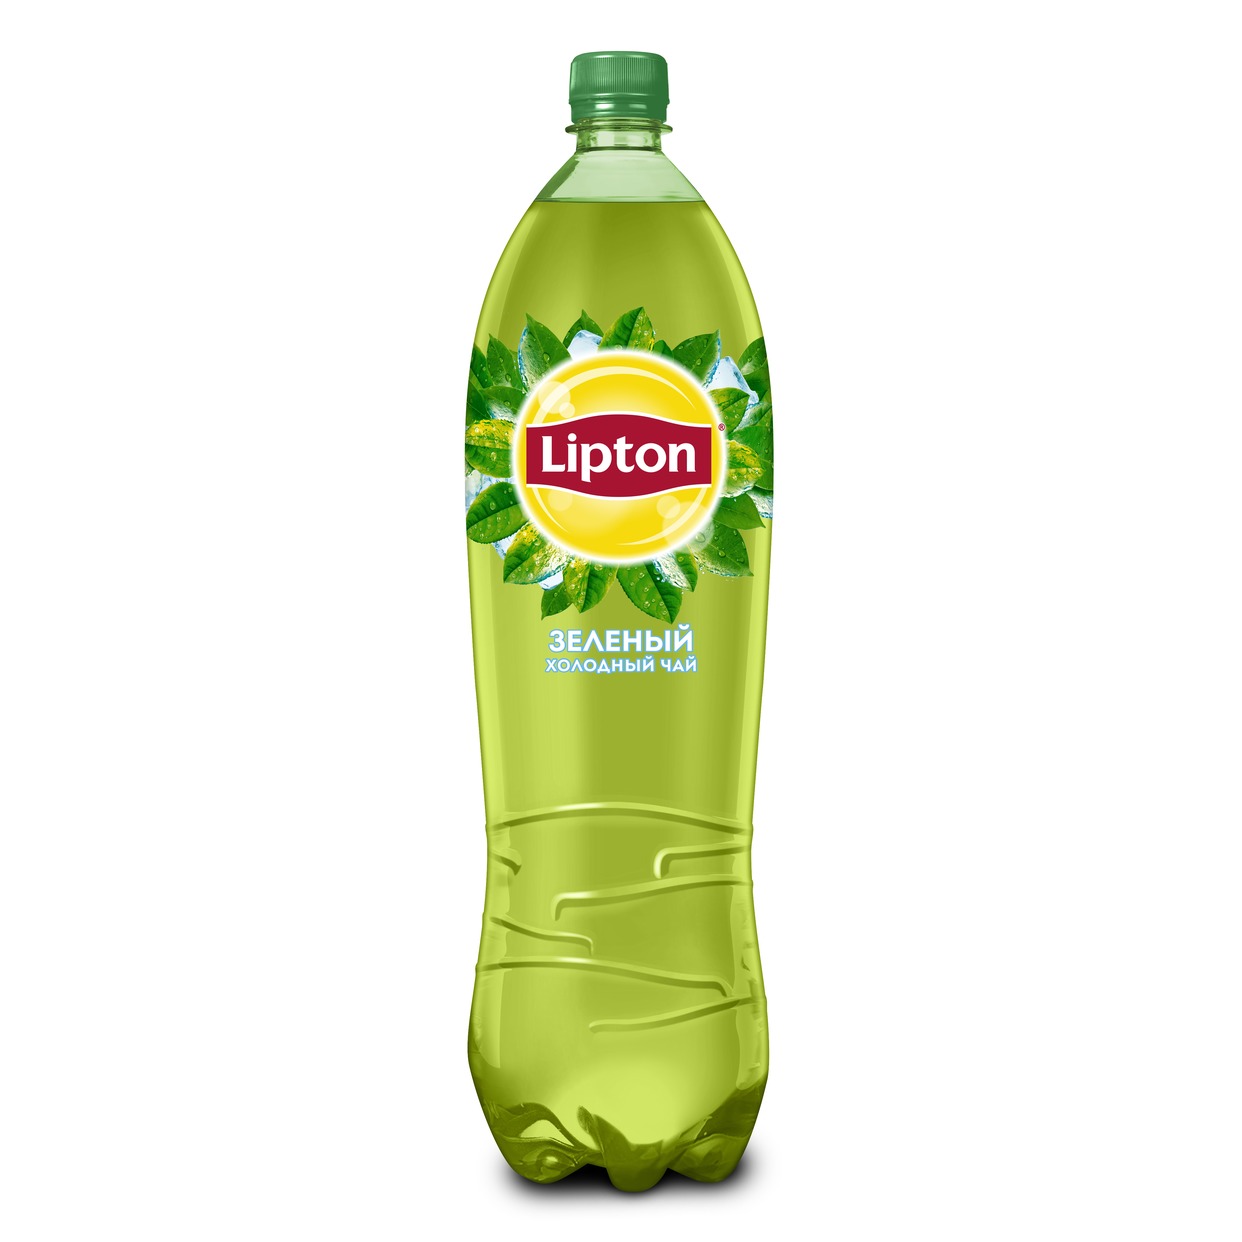 LIPTON Напиток ICE TEA зел.1,5л по акции в Пятерочке